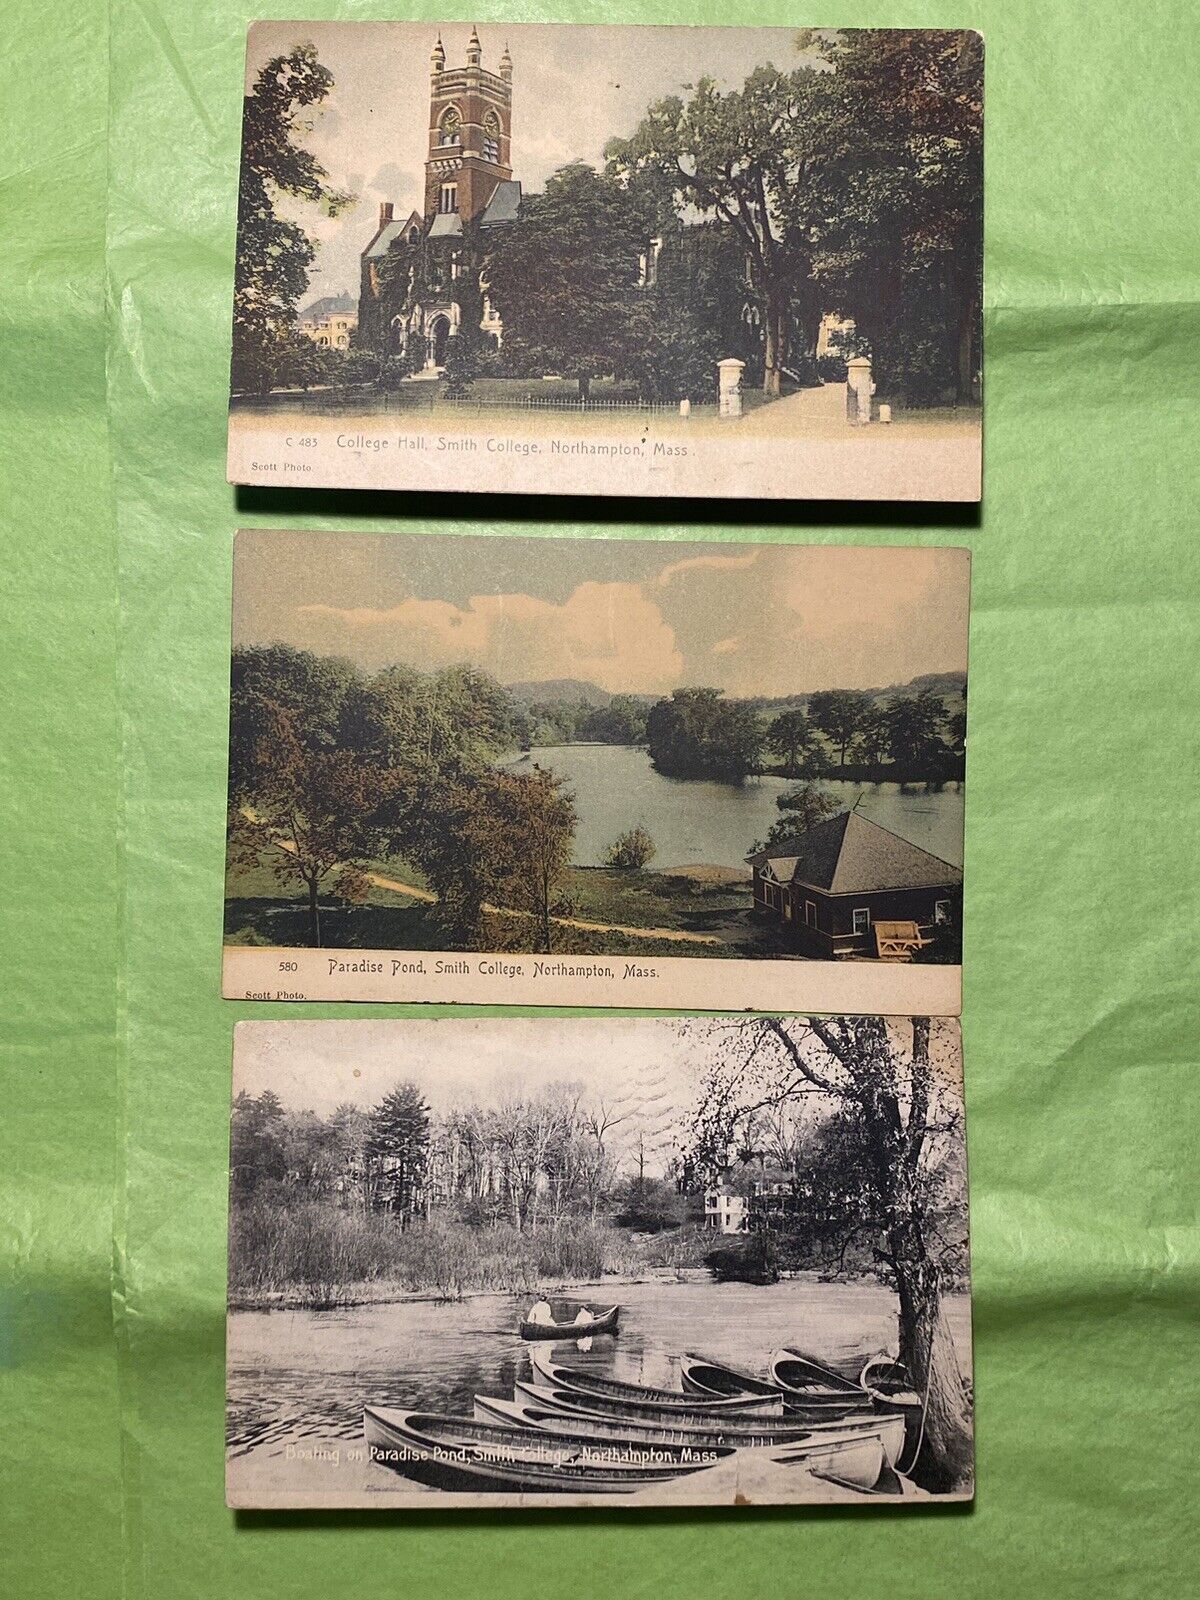 1908 Postcards that Arrived